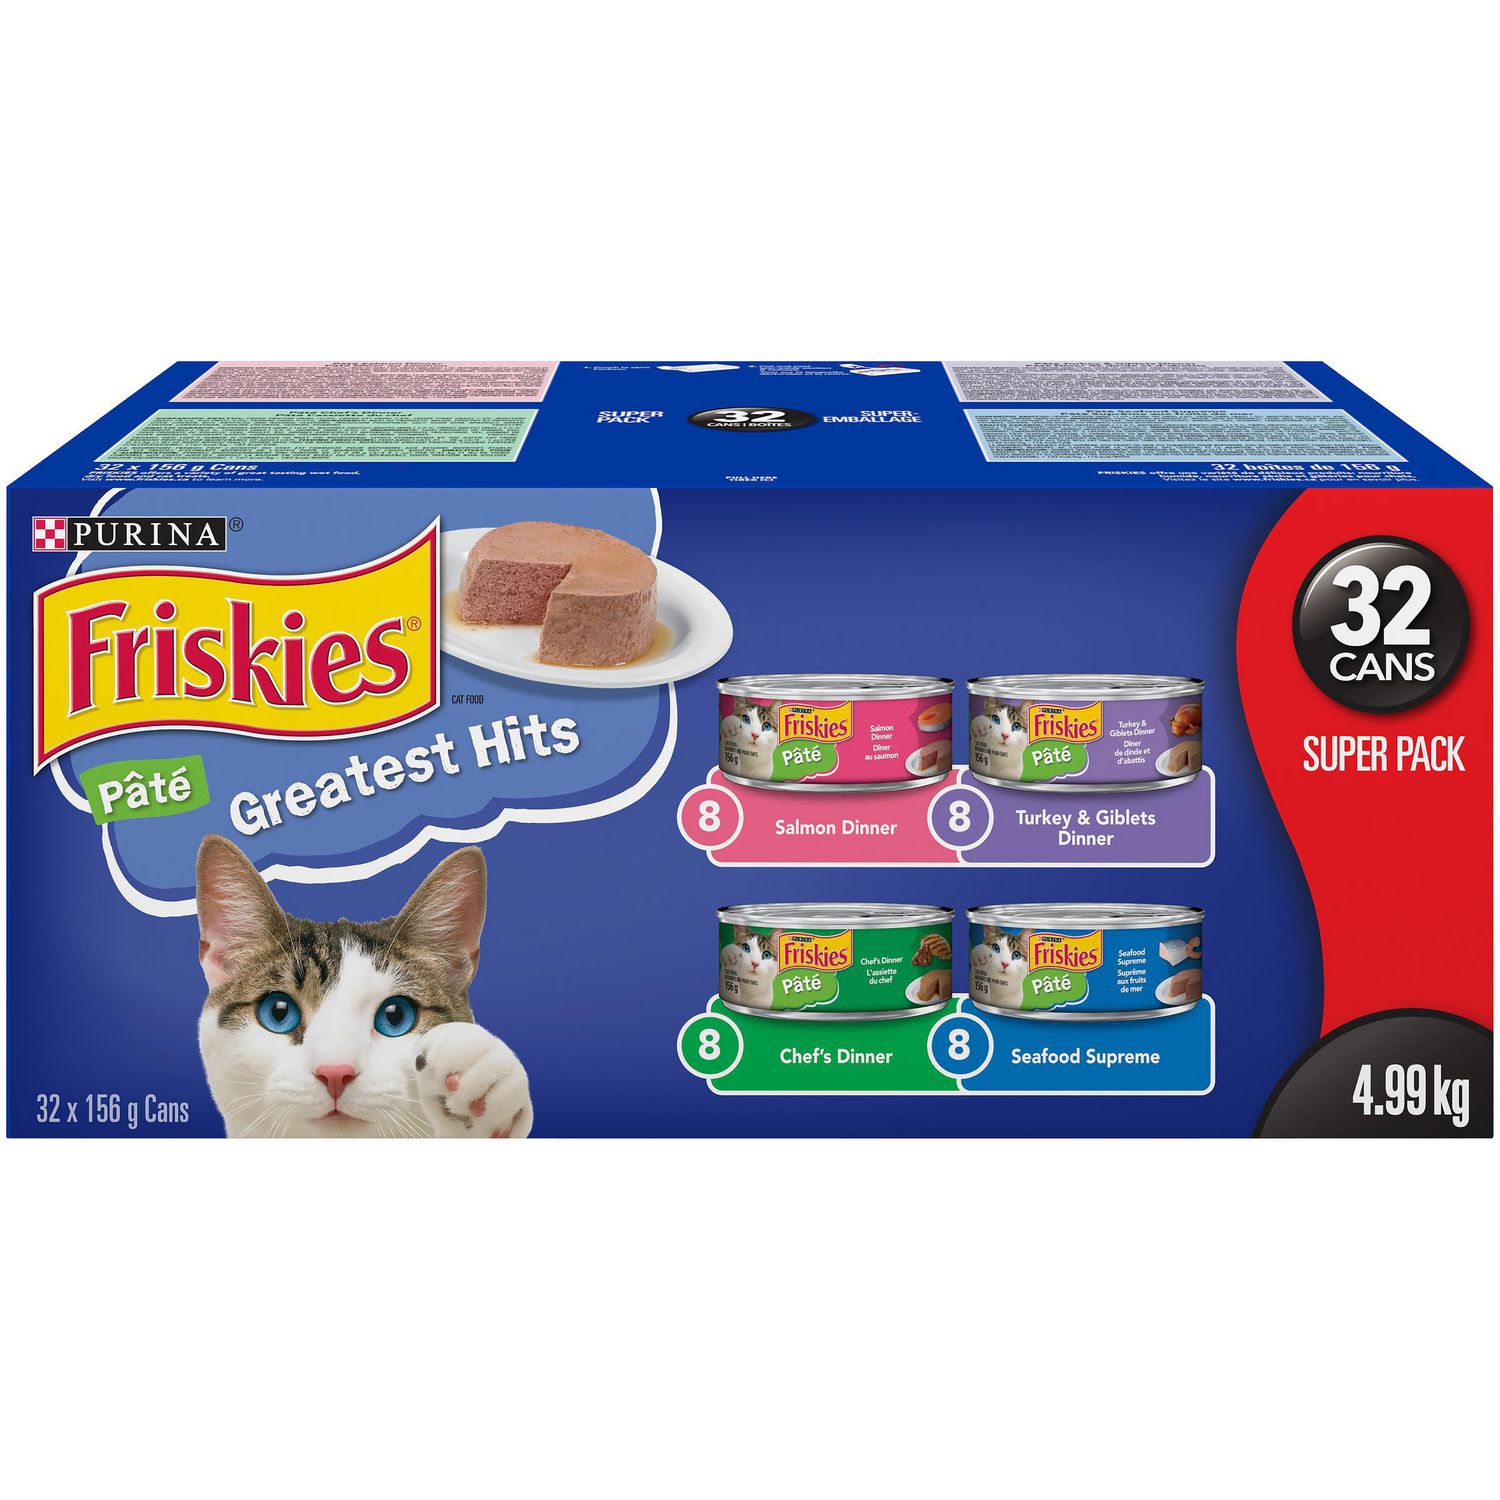 Friskies Pate Greatest Hits Wet Cat Food Variety Pack Walmart Canada